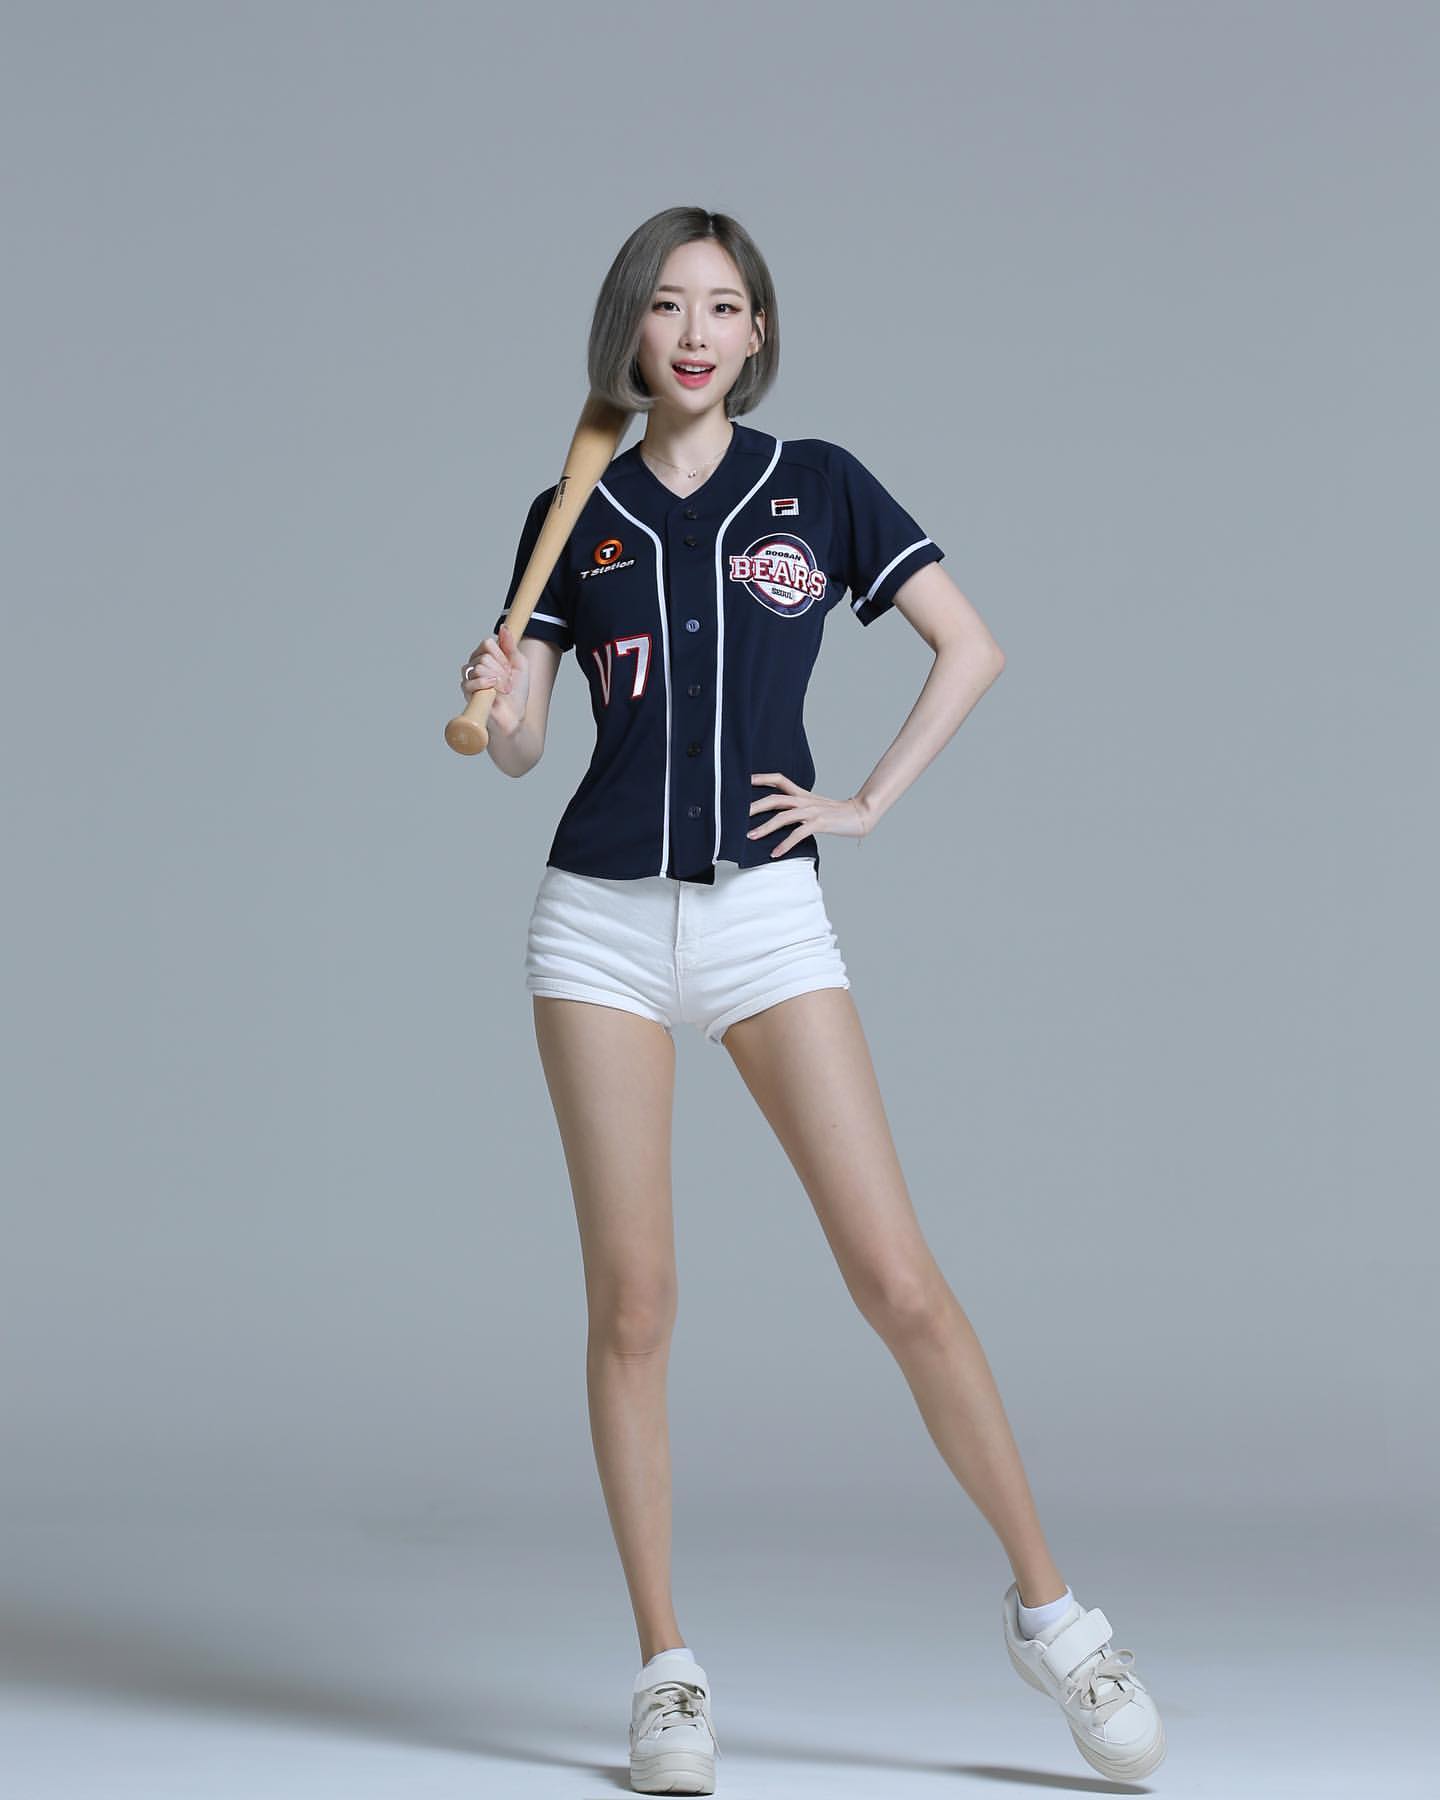 Seo Hyunsook's cheerleader Instagram.